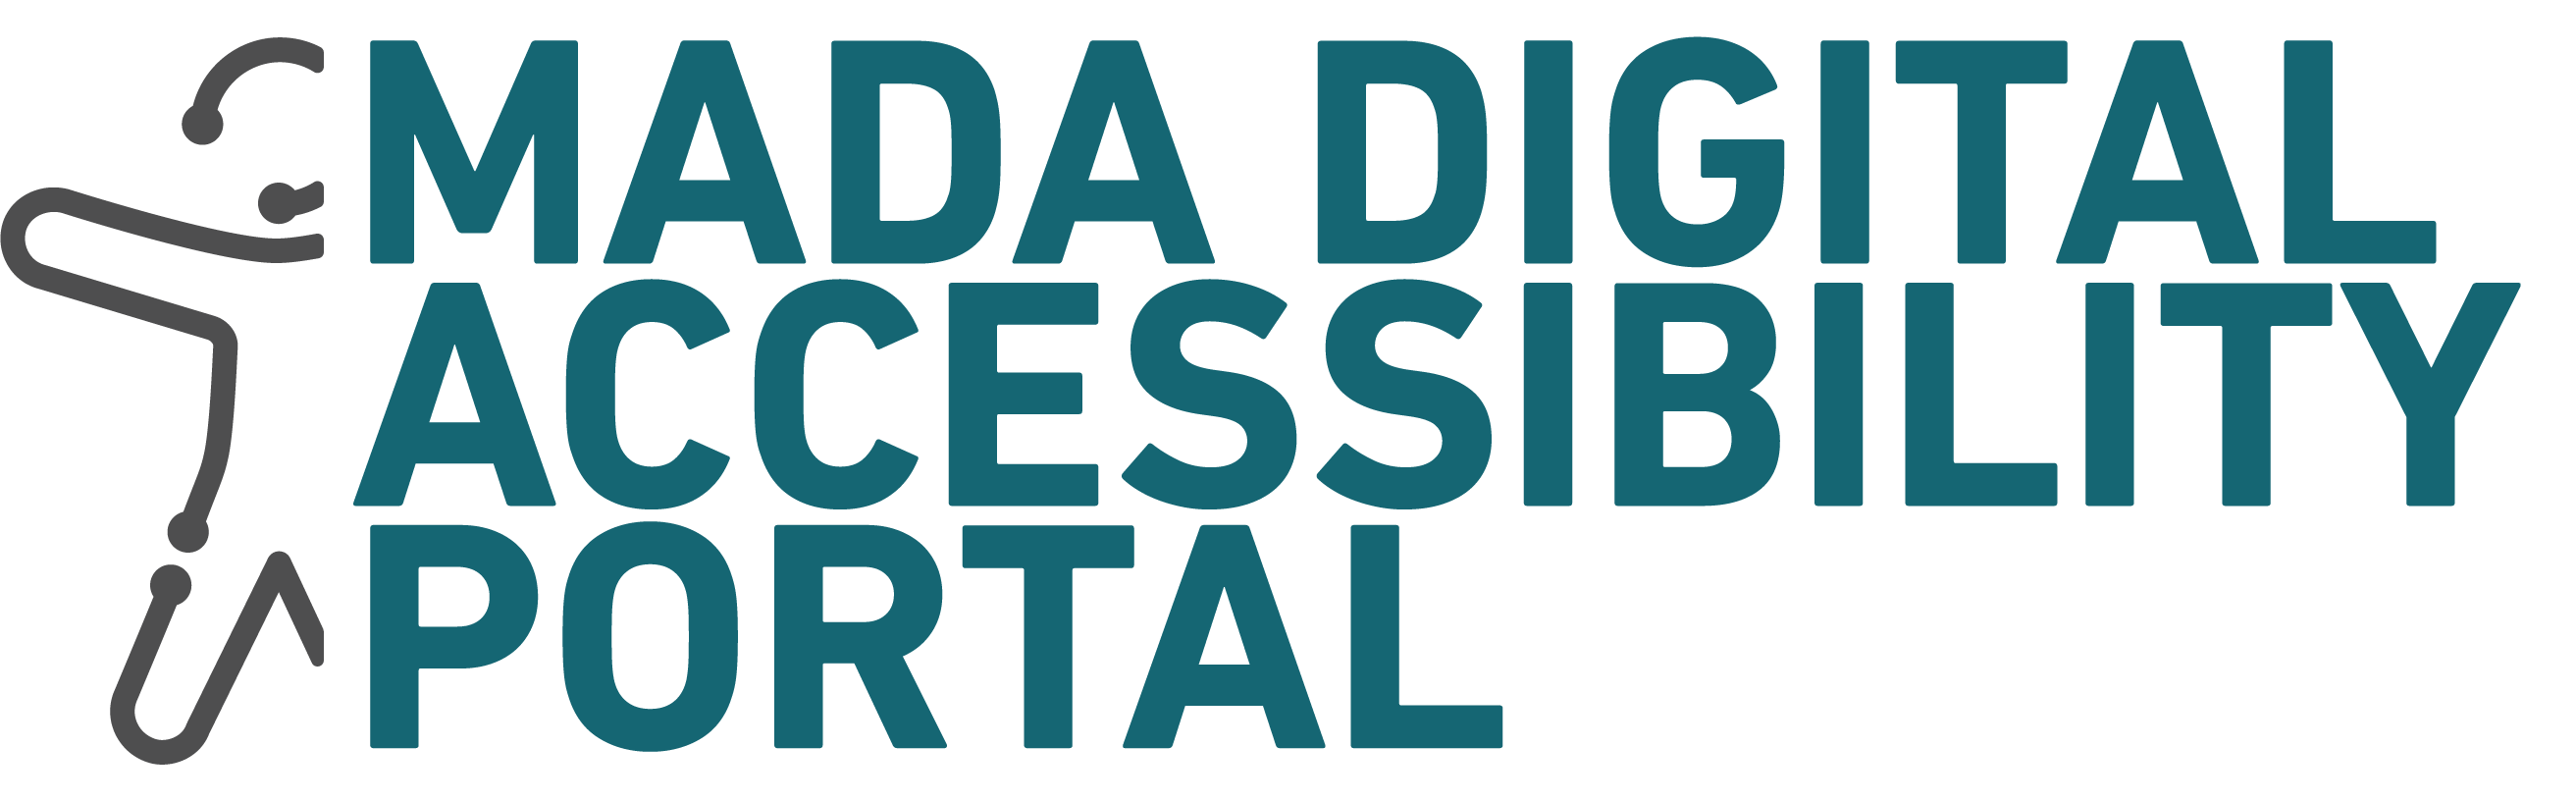 Mada Digital Accessibility Portal Home Page